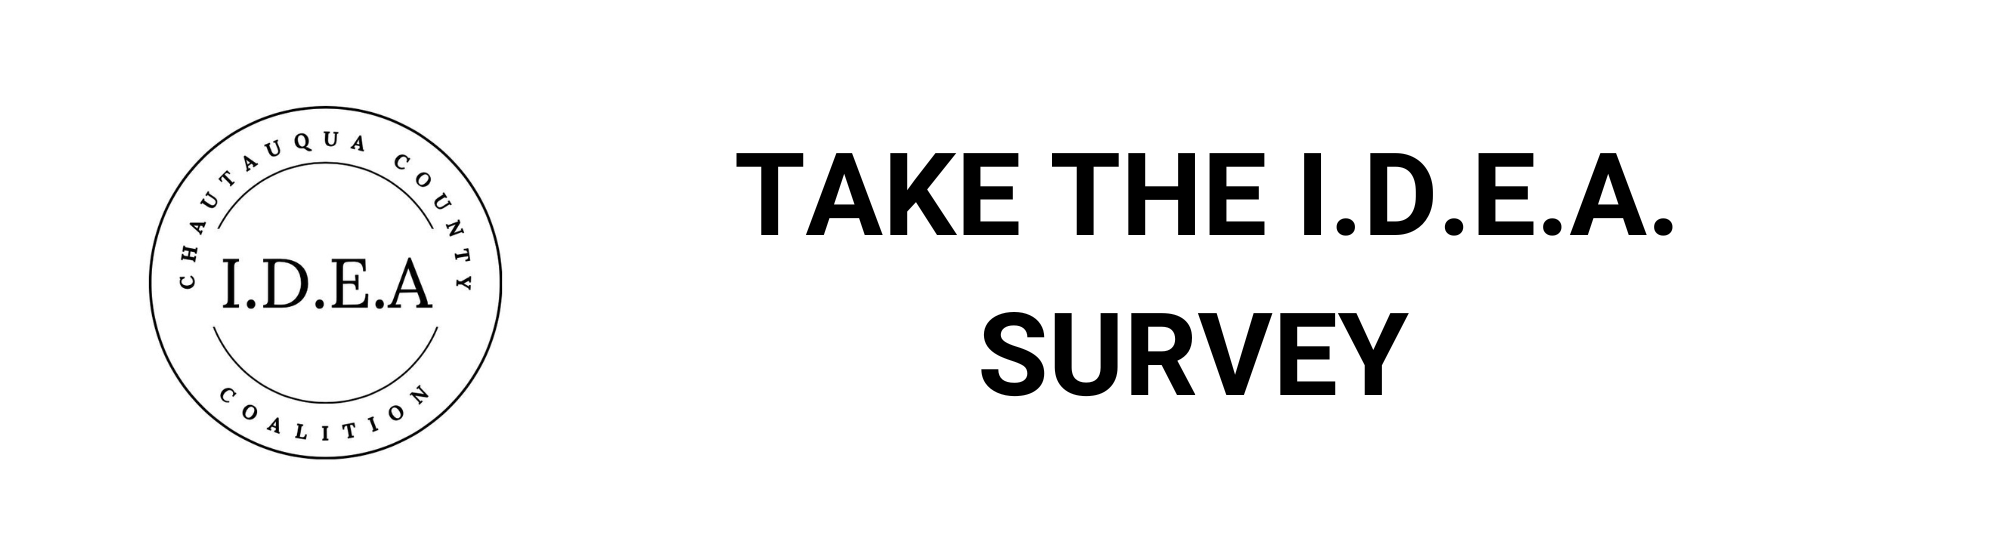 IDEA logo and text: Take the IDEA Survey